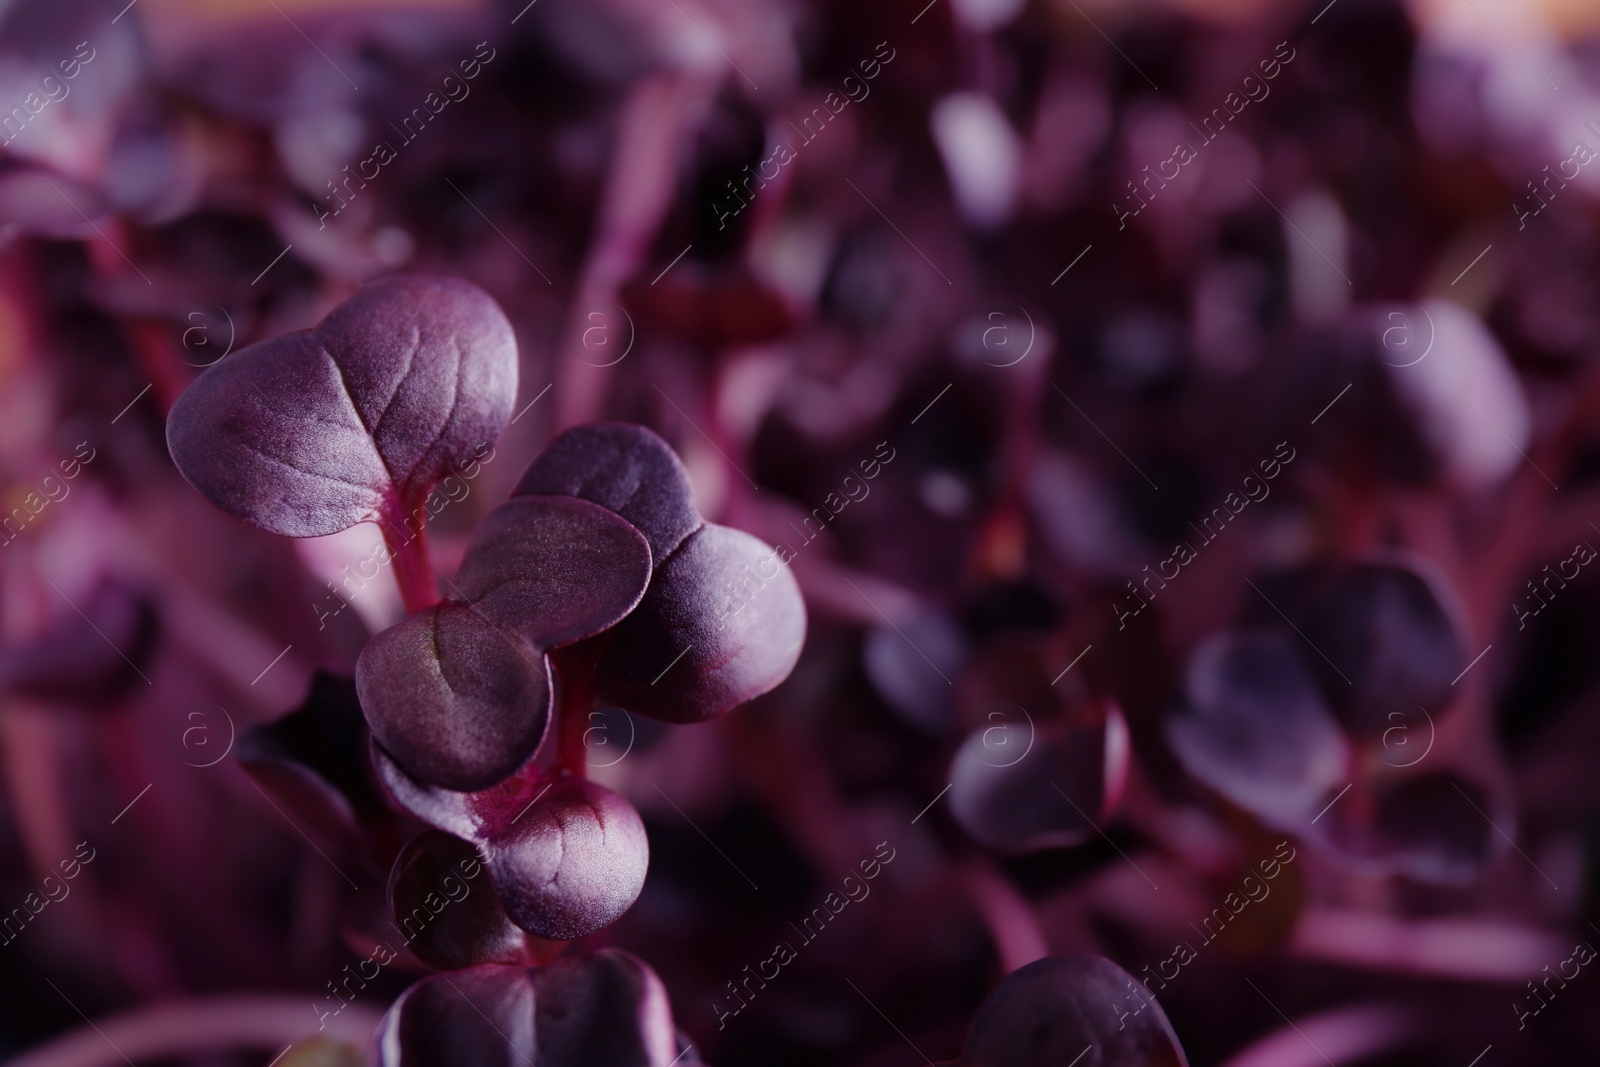 Photo of Fresh radish microgreens as background, closeup view